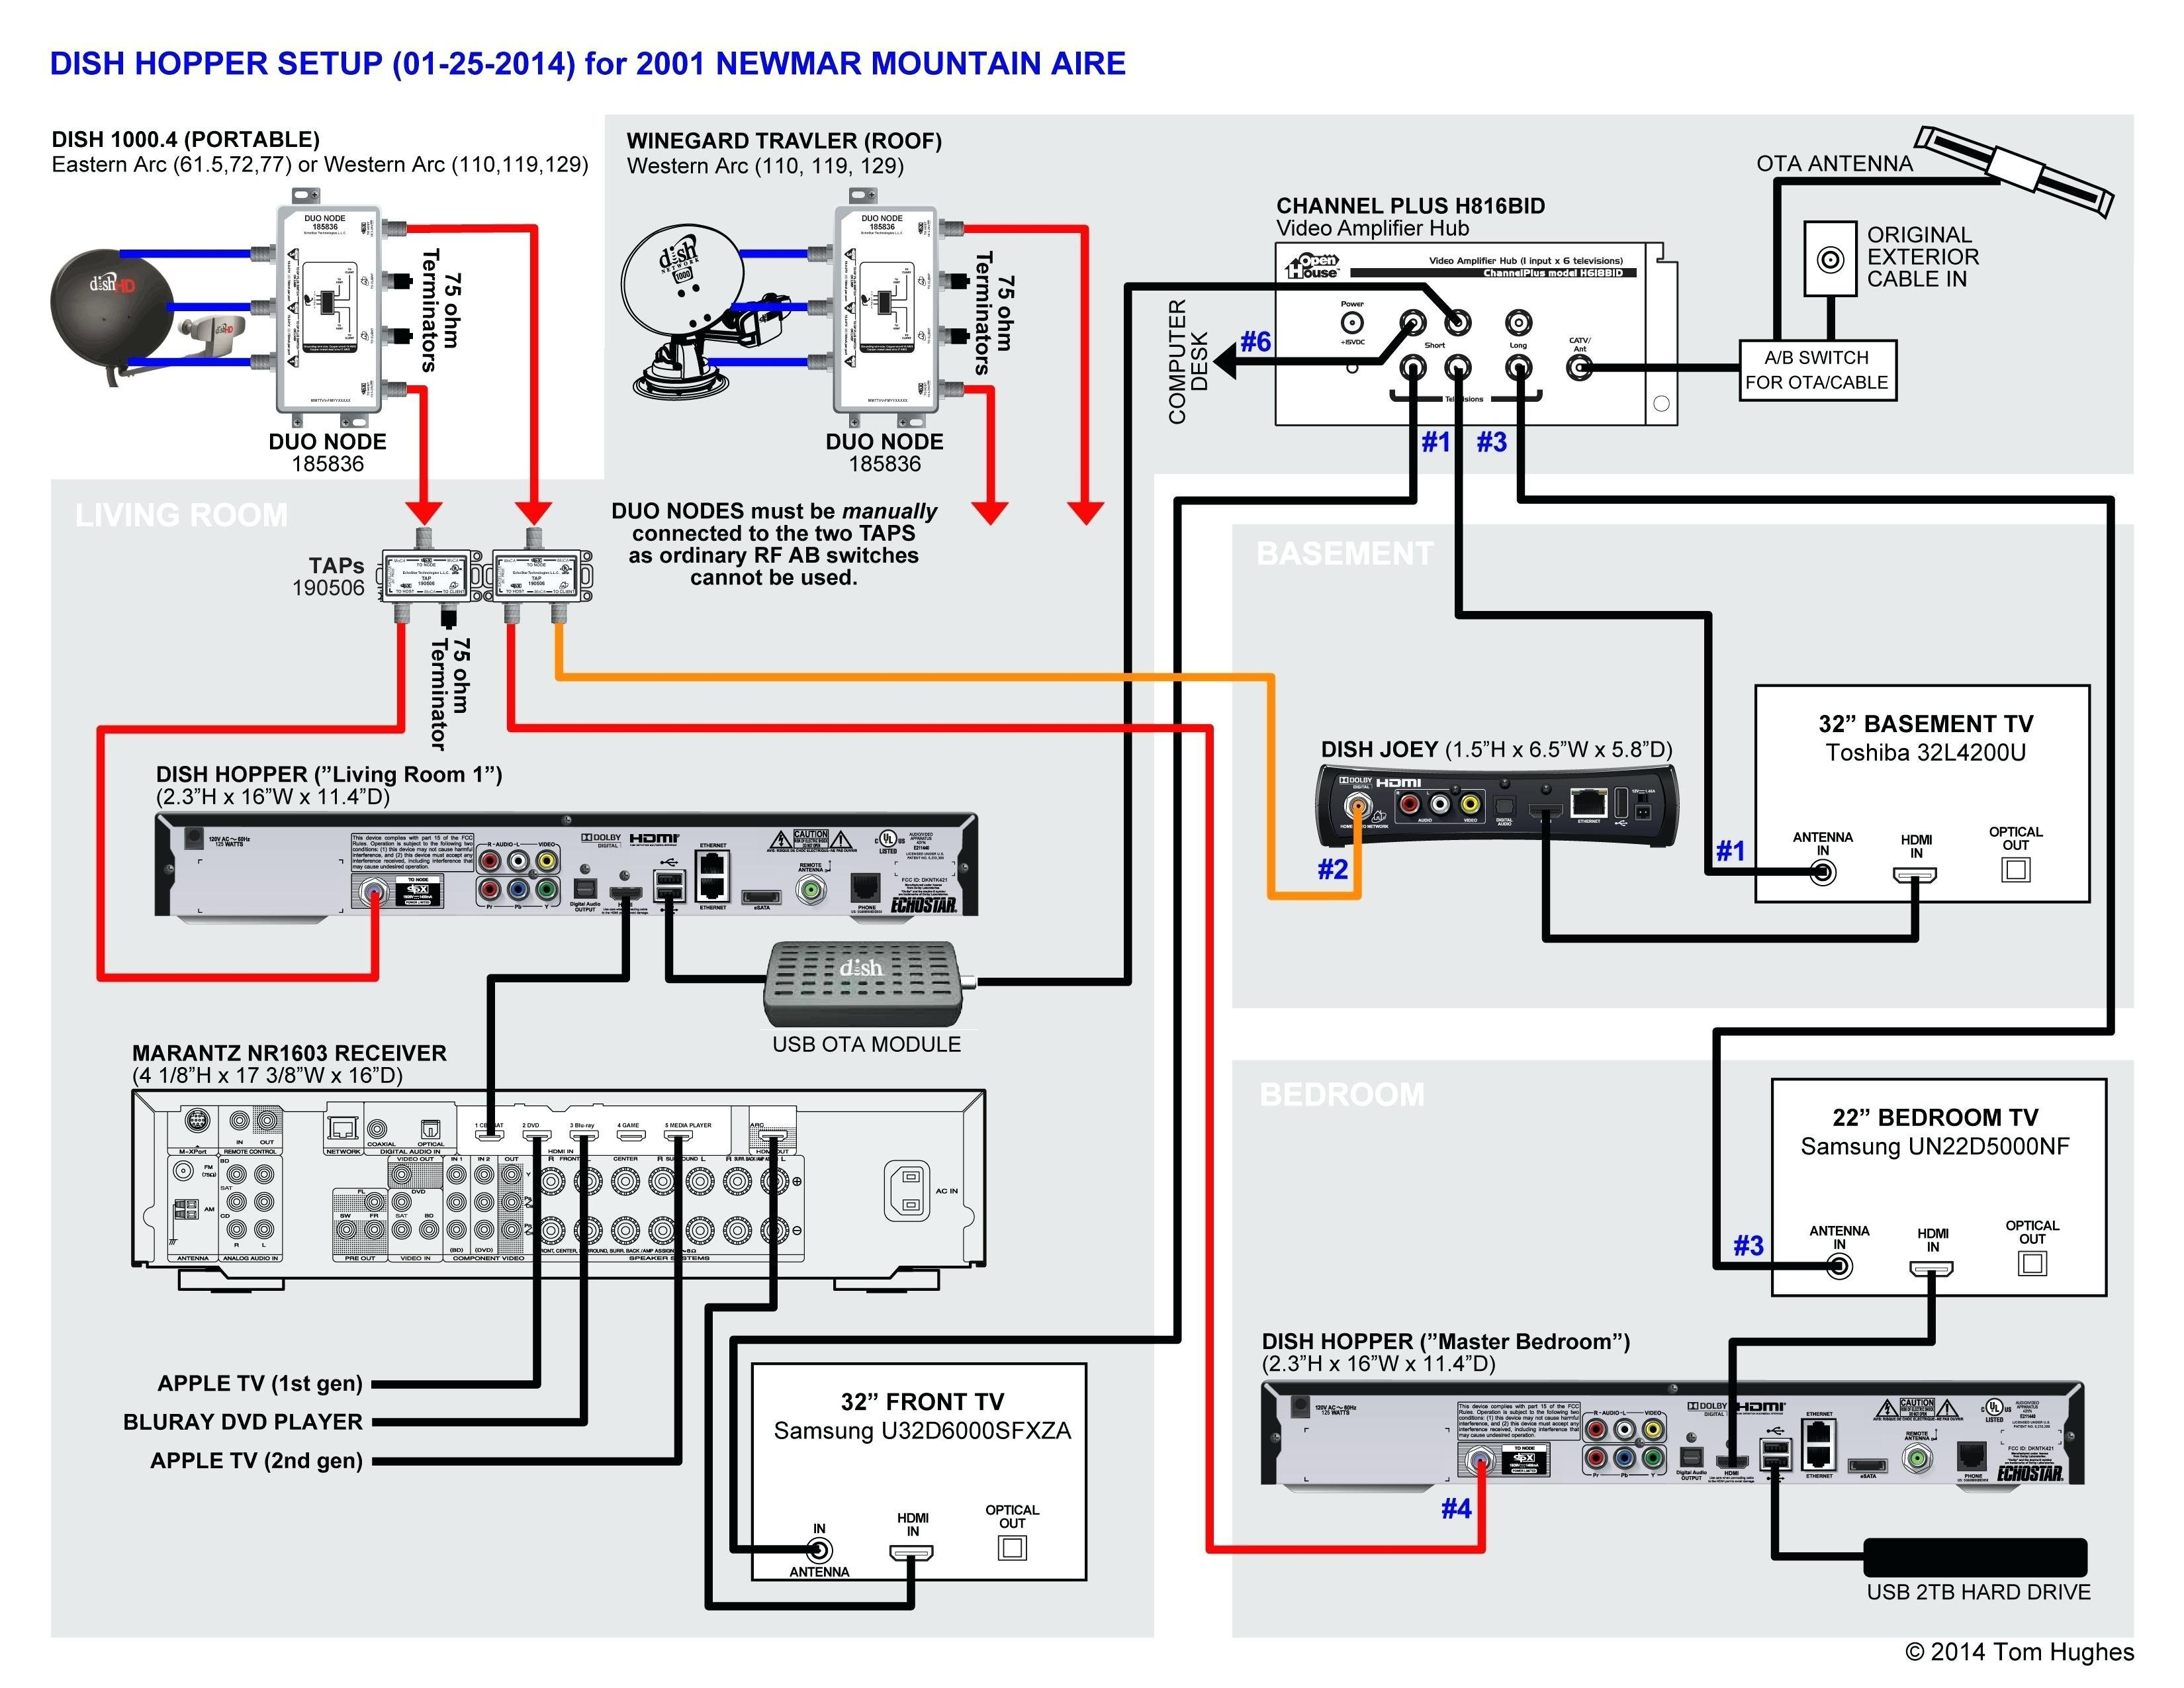 Super Joey Wiring Diagram | Wiring Diagram - Dish Hopper Joey Wiring Diagram